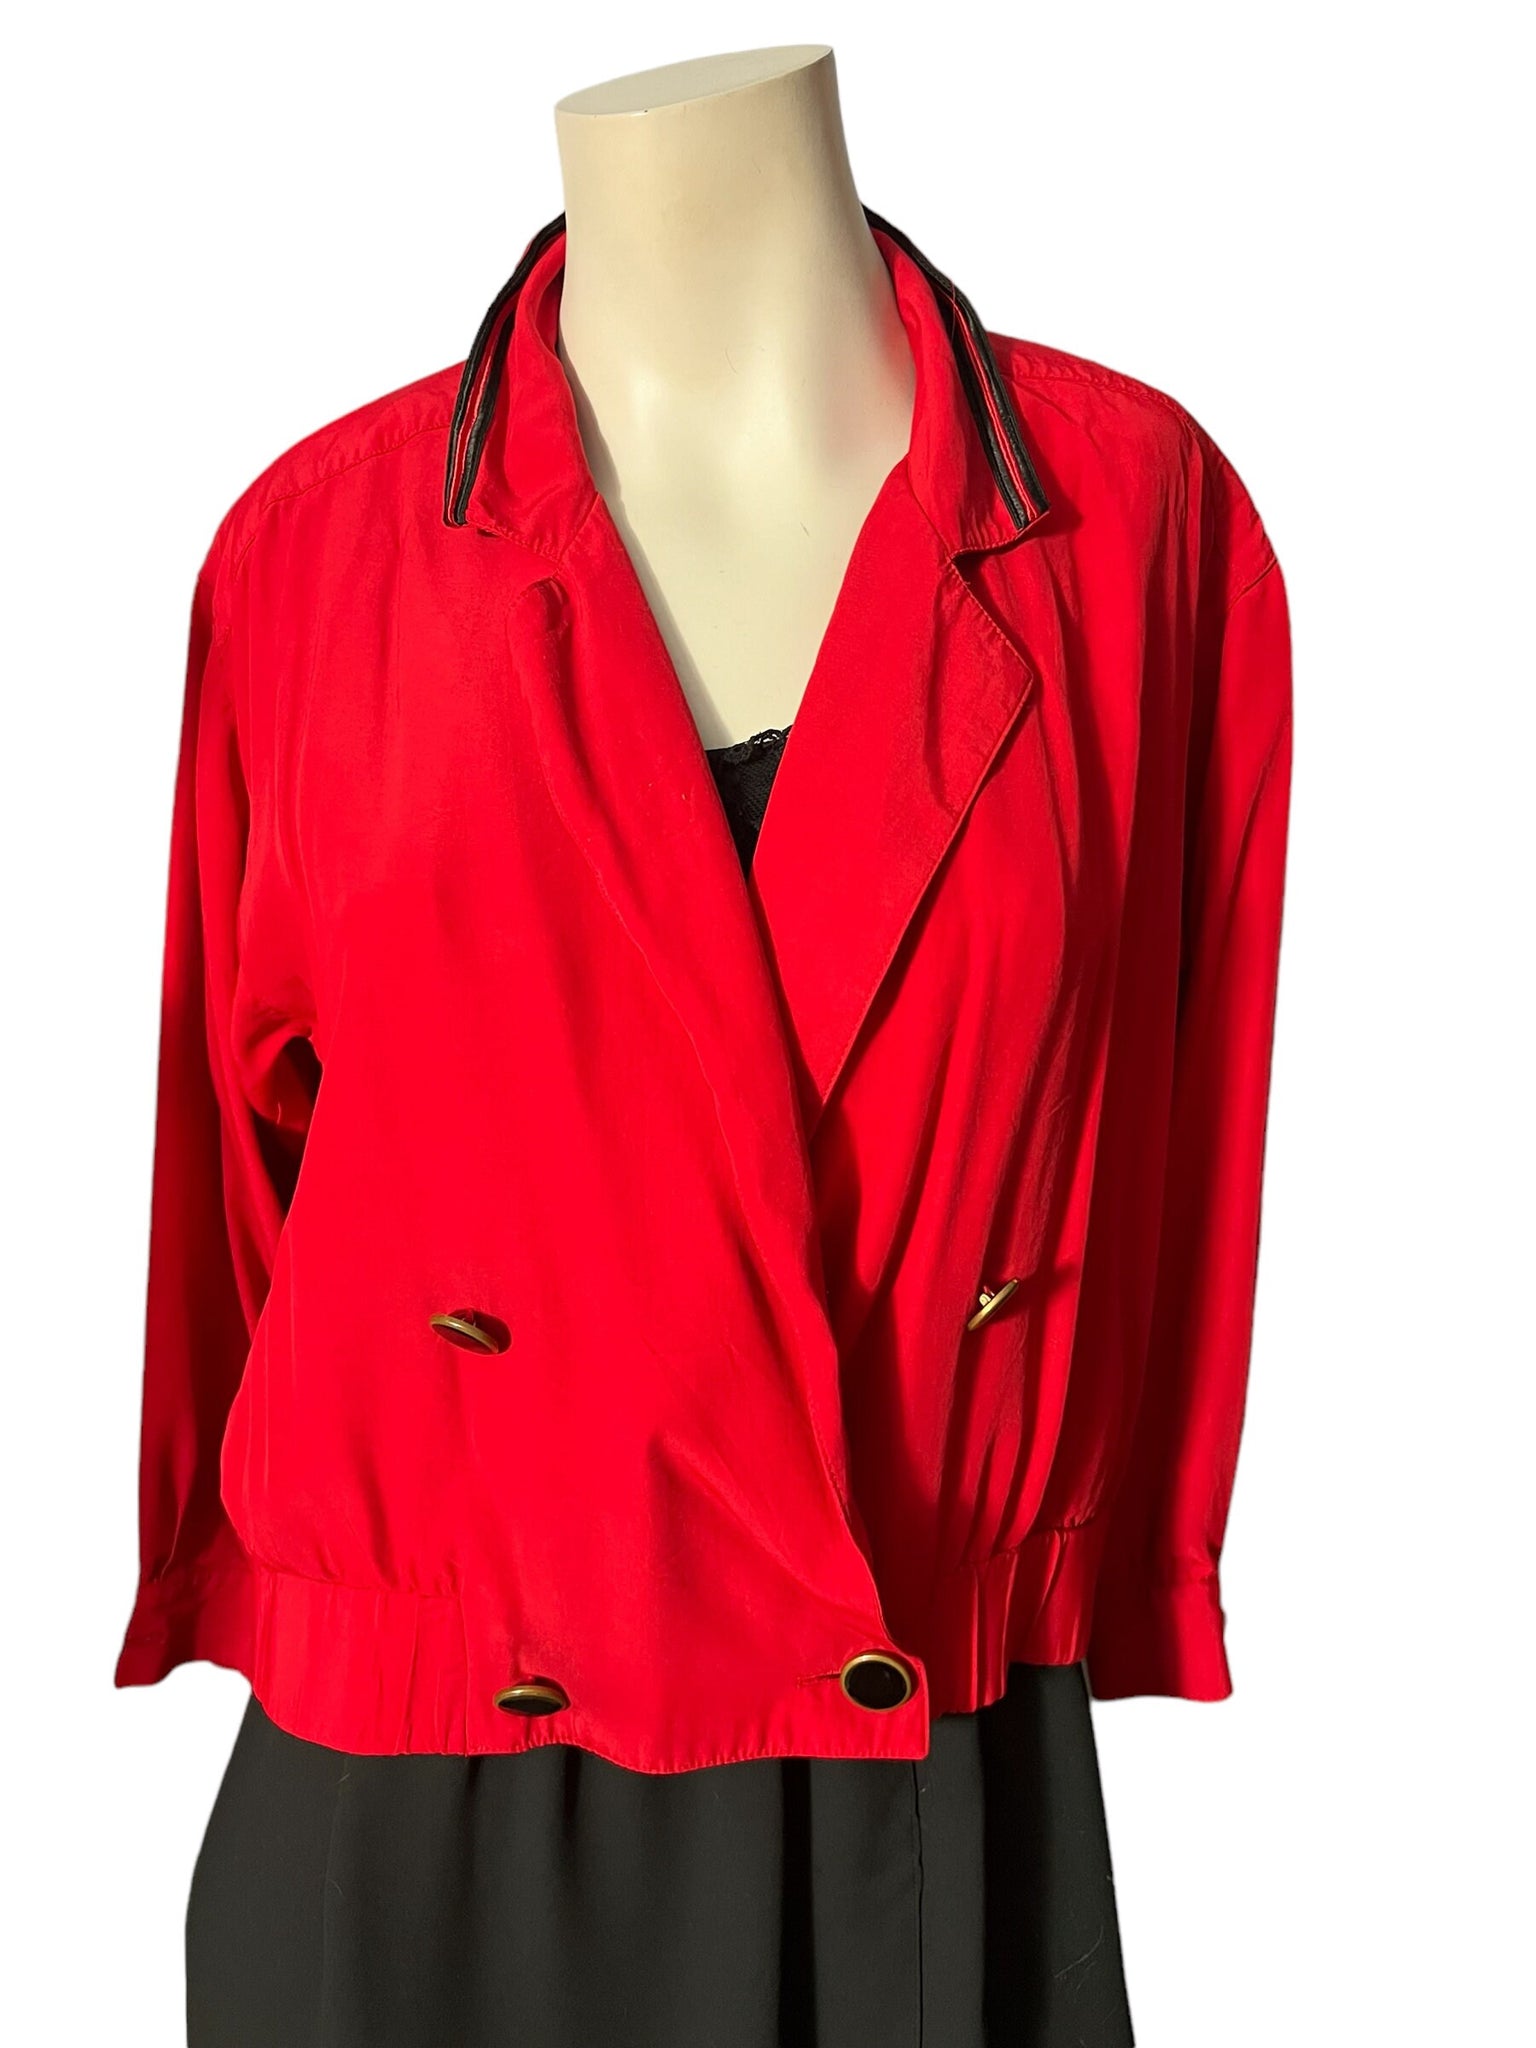 Vintage 80's red & black jacket petite 4 Leslie Fay